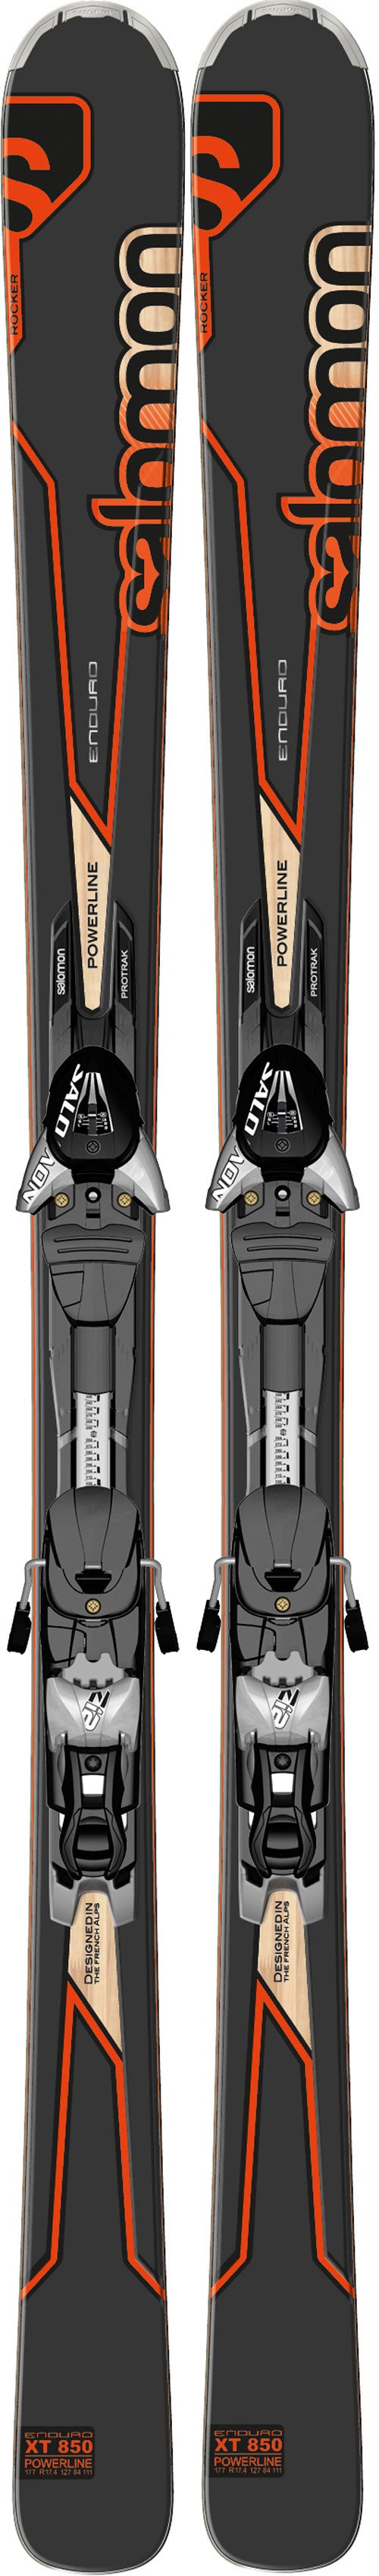 Faial voorkomen Keizer Salomon Enduro XT 850 (2013) - Ski Mag